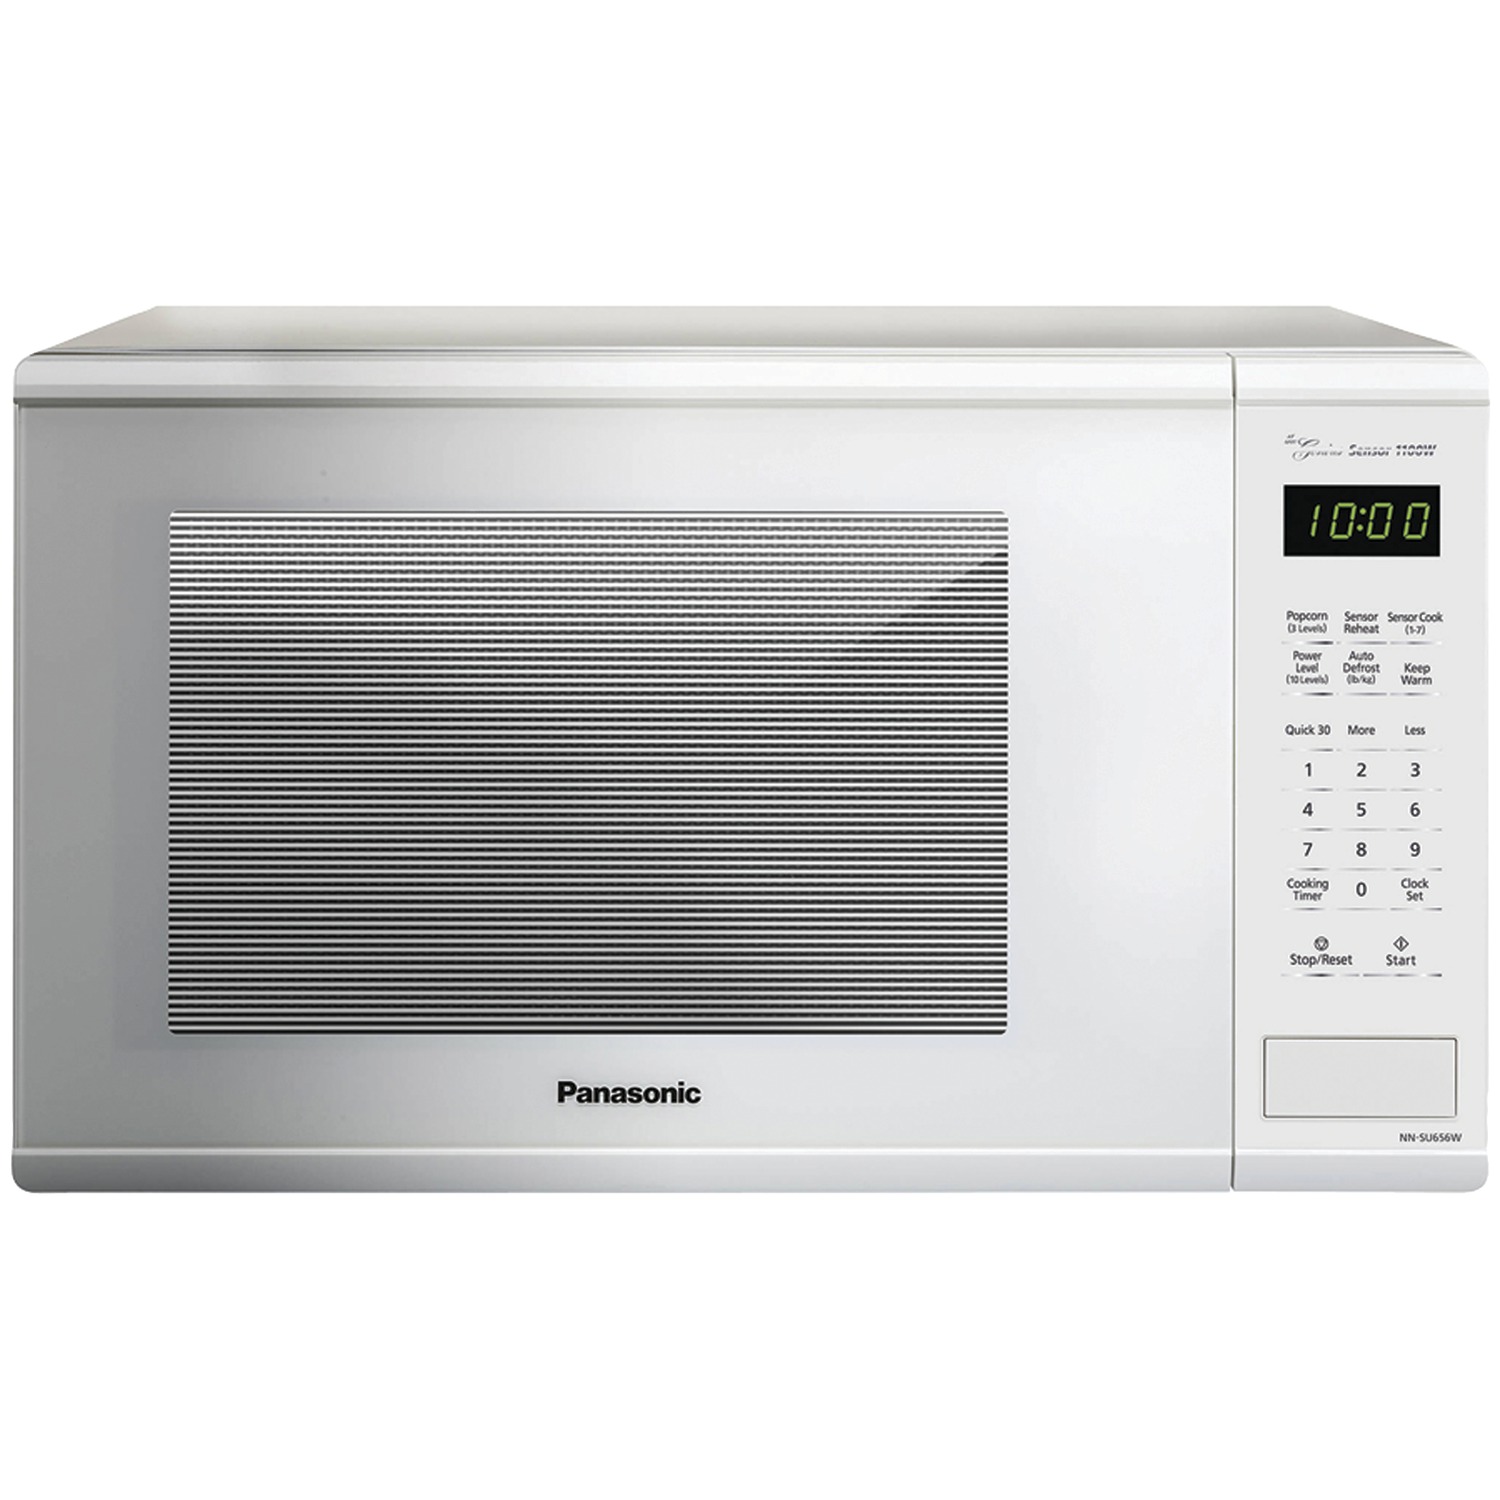 Panasonic  New 1.3 Cu. ft. 1100W Genius Sensor Countertop Microwave Oven in White - image 1 of 7